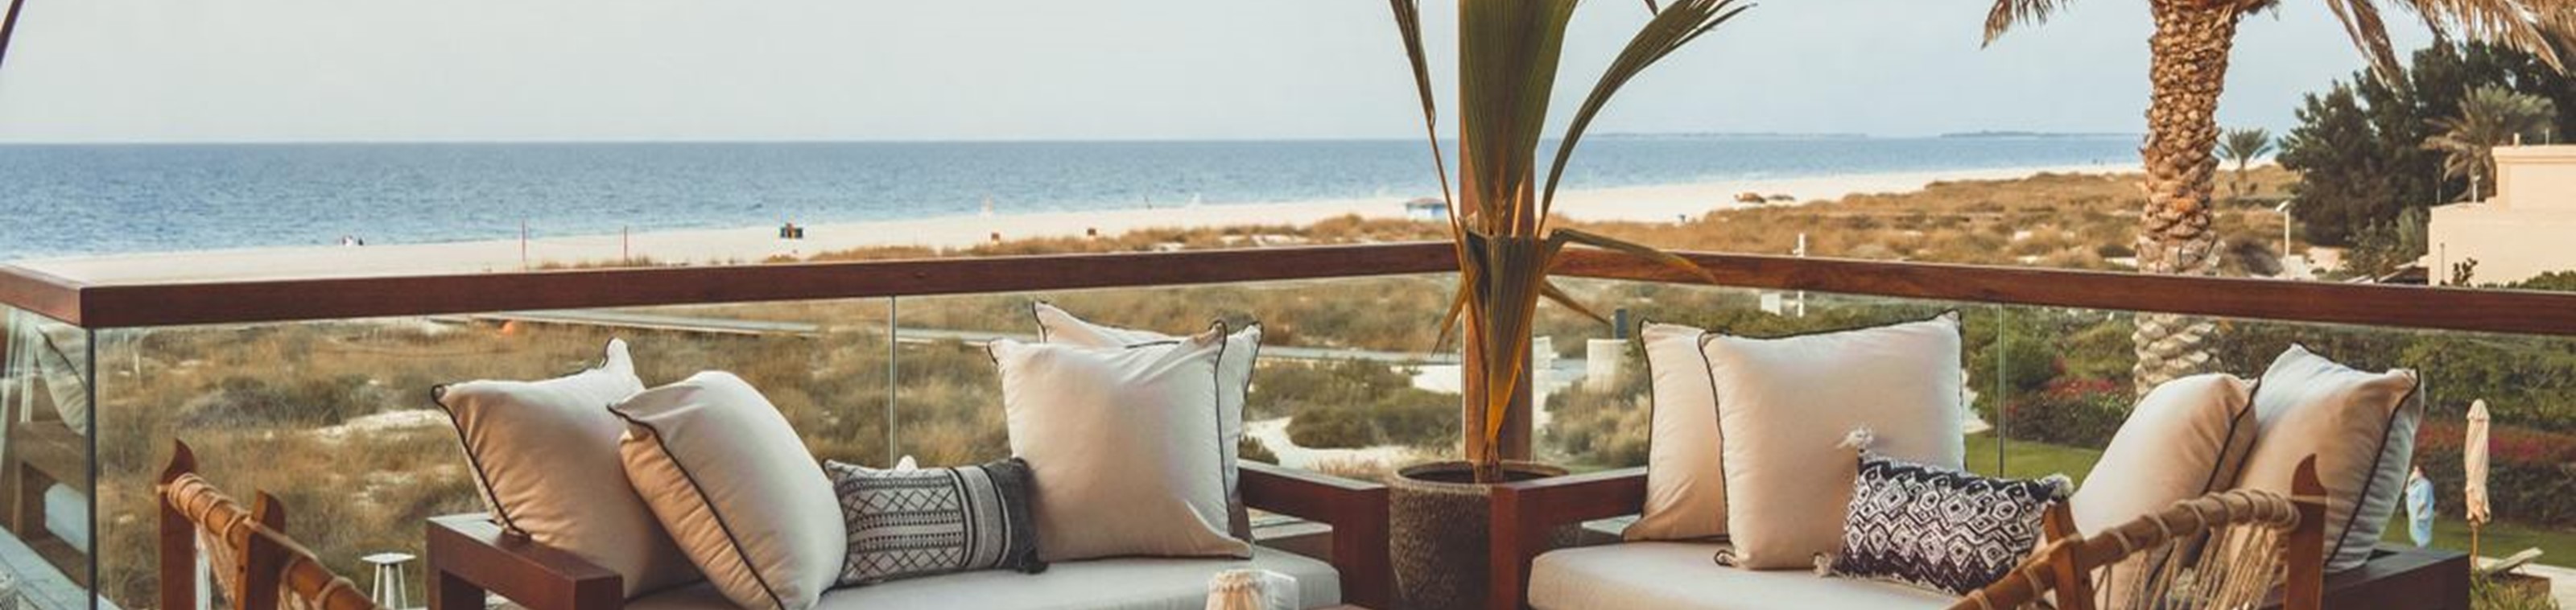 Prachtige luxehotels in Abu Dhabi